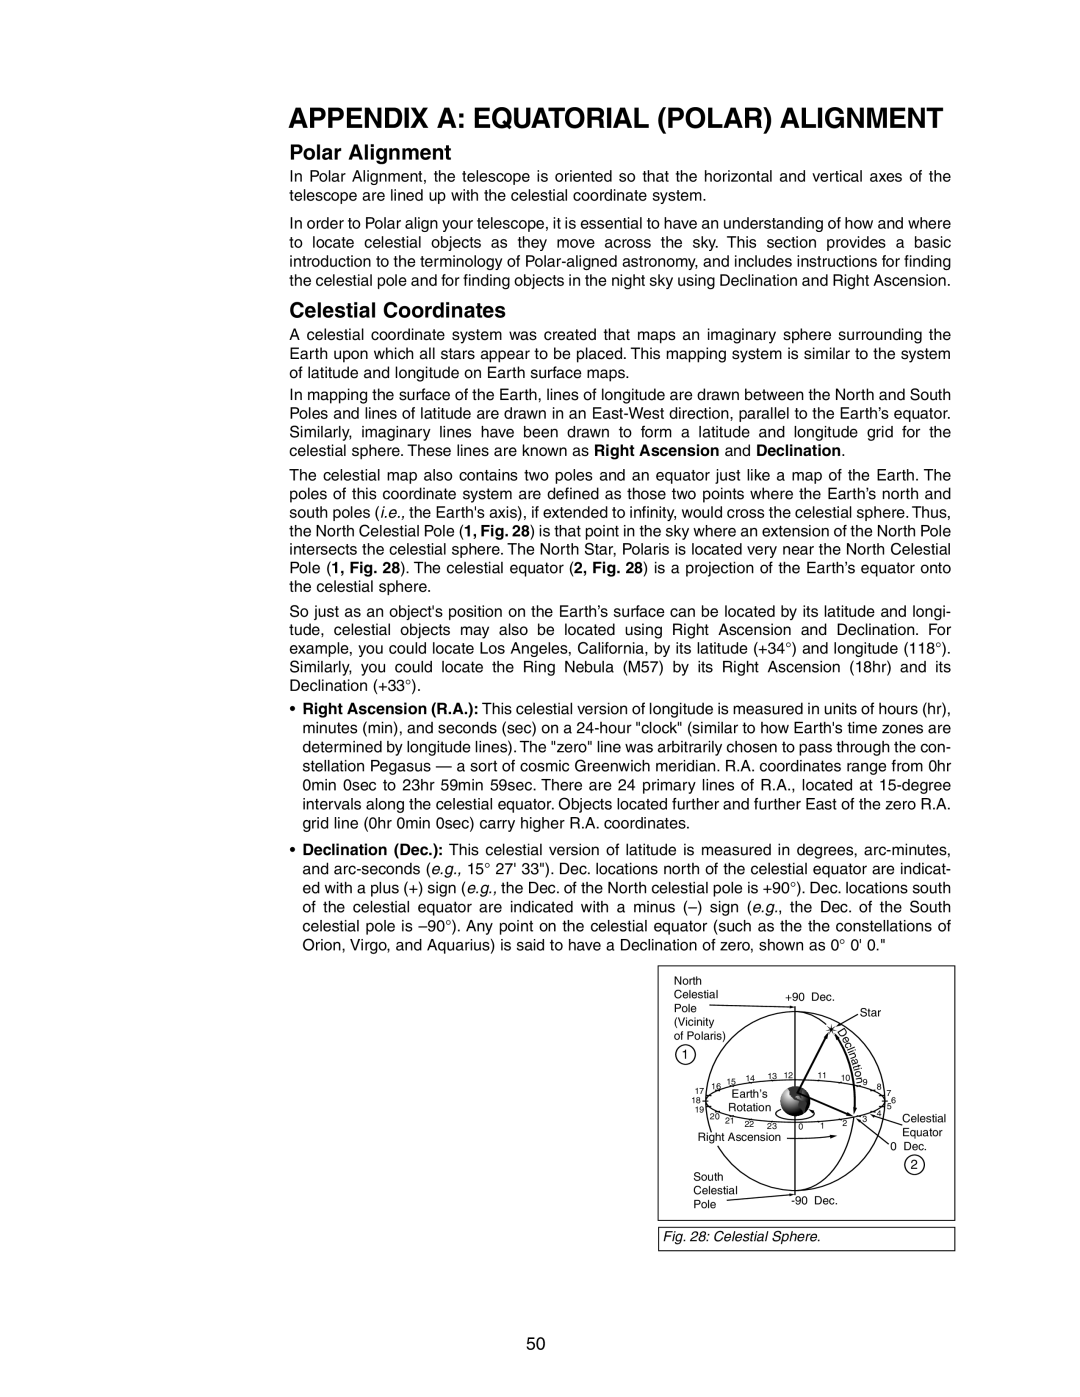 Meade LX90GPS instruction manual Appendix A: Equatorial Polar Alignment, Celestial Coordinates 